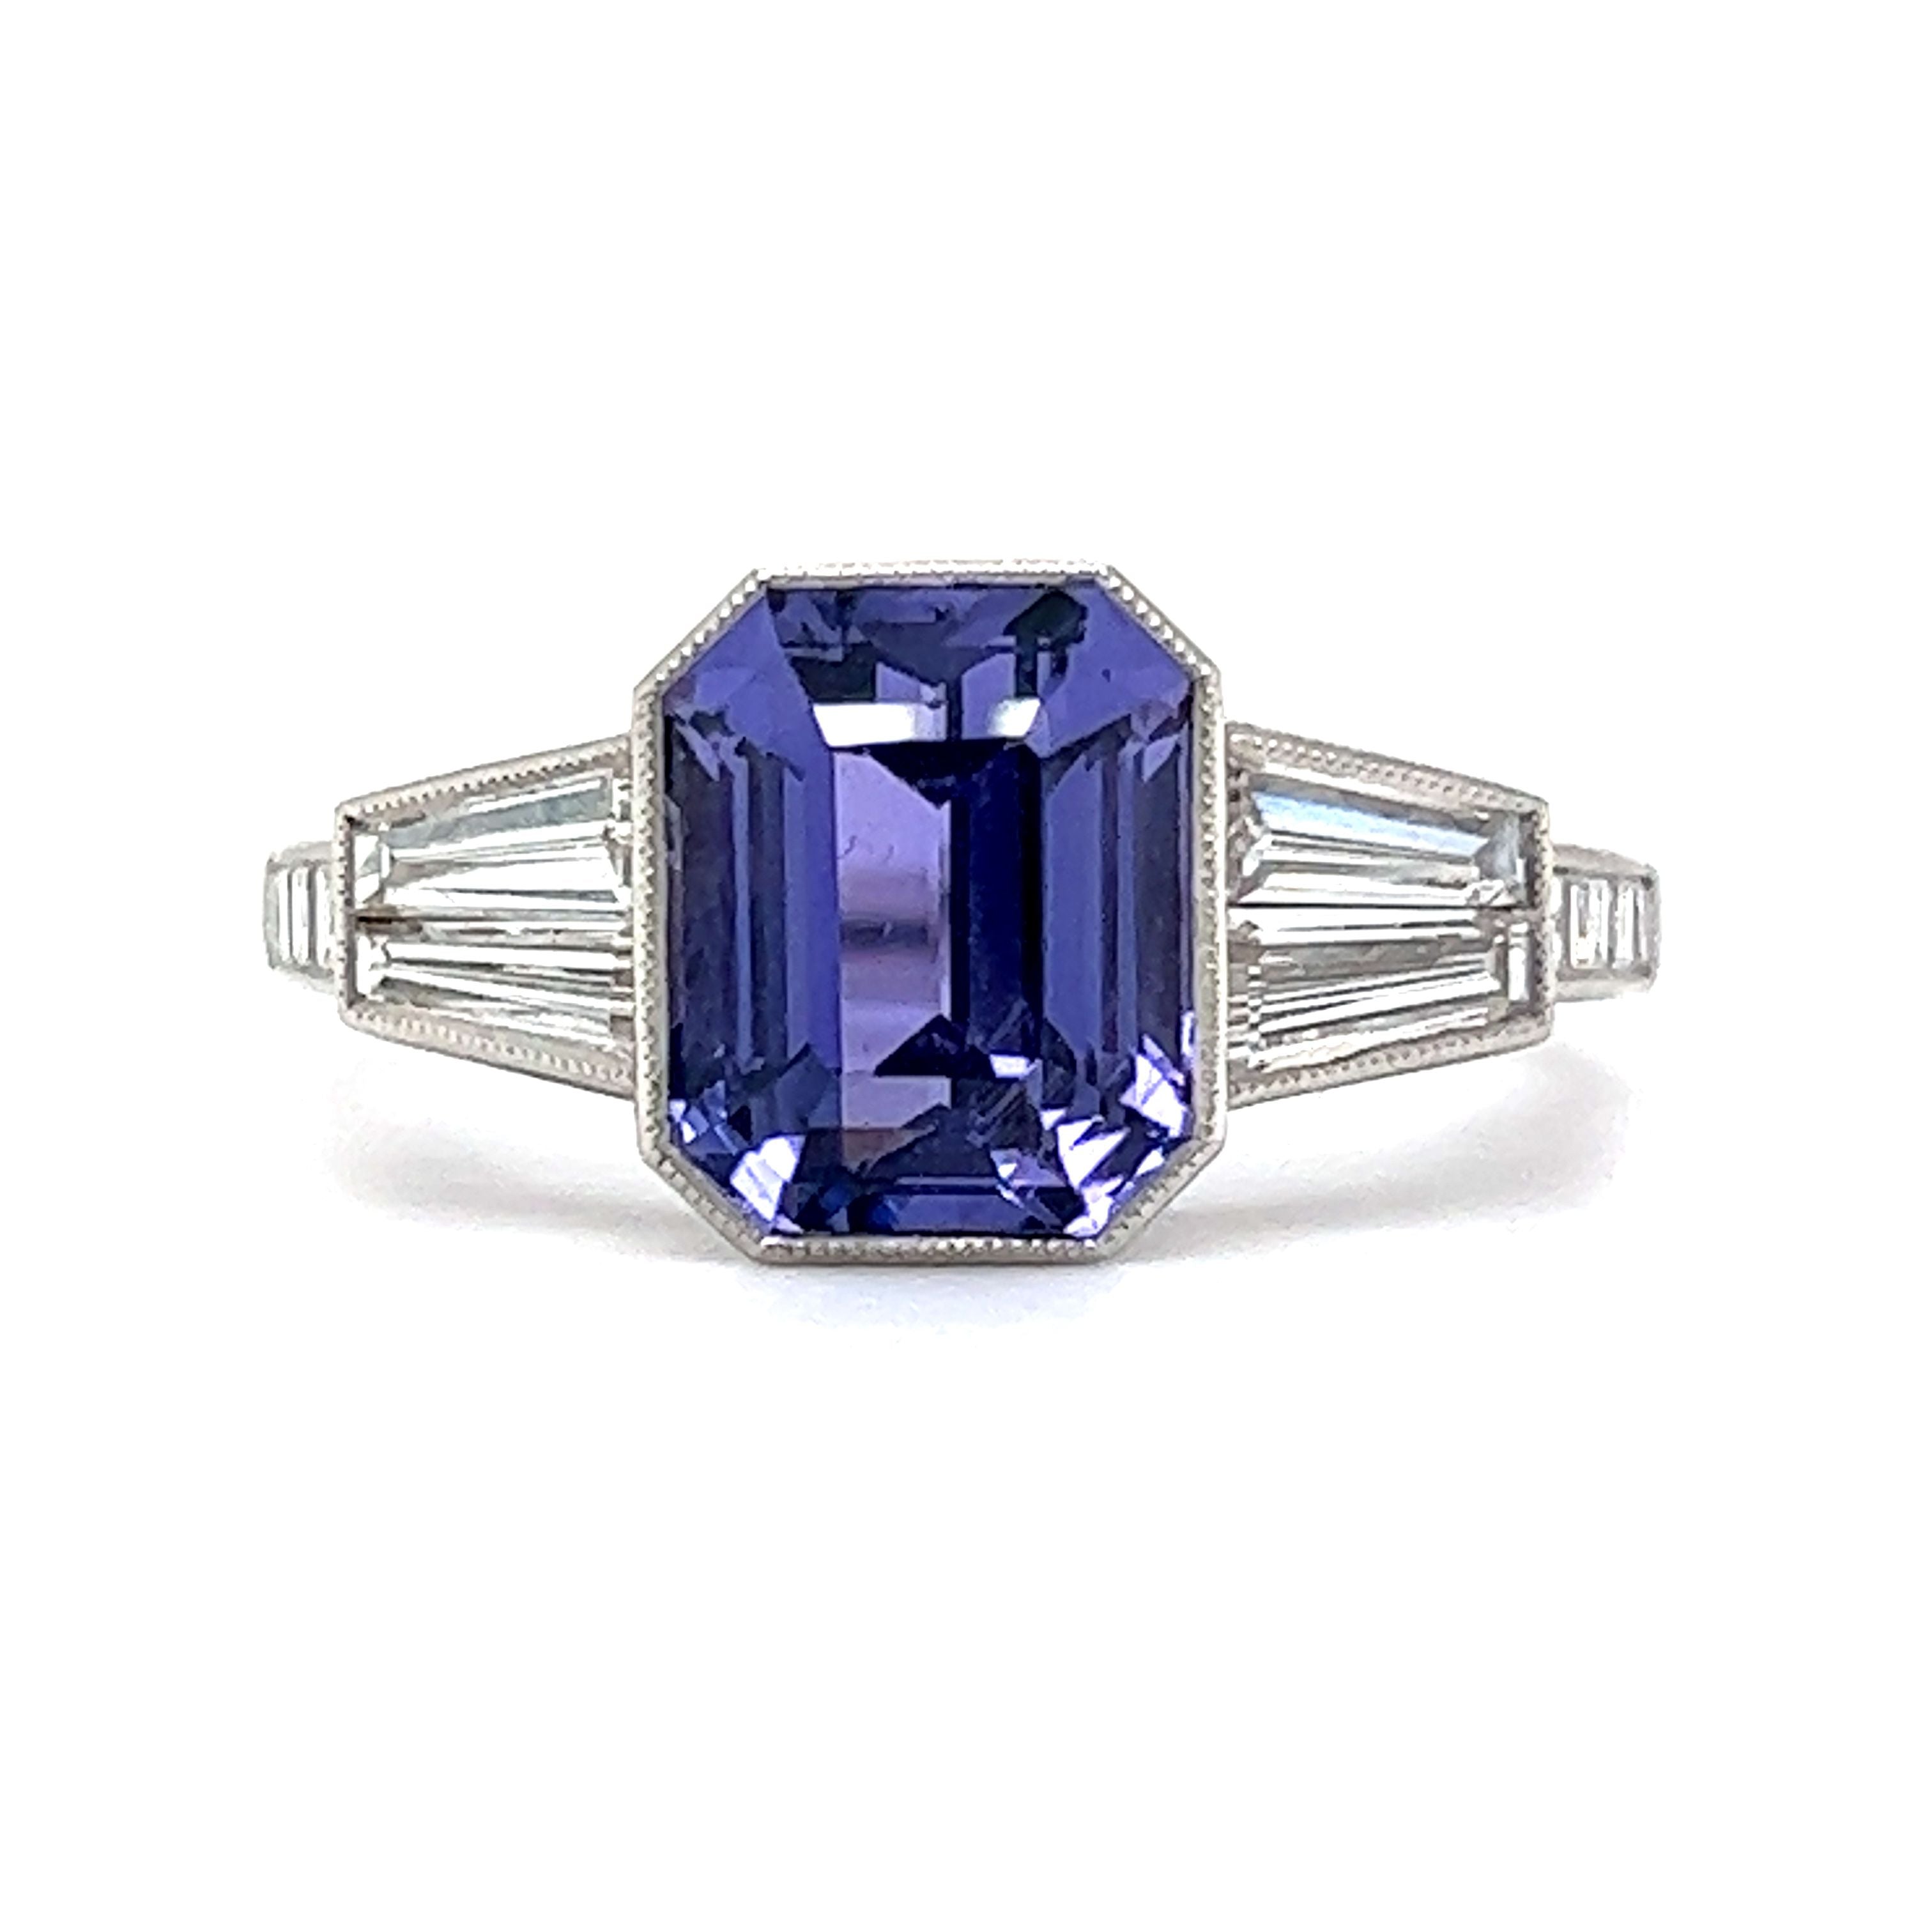 Half Moon Sapphire Engagement Ring with Baguette Cut Diamond – ARTEMER